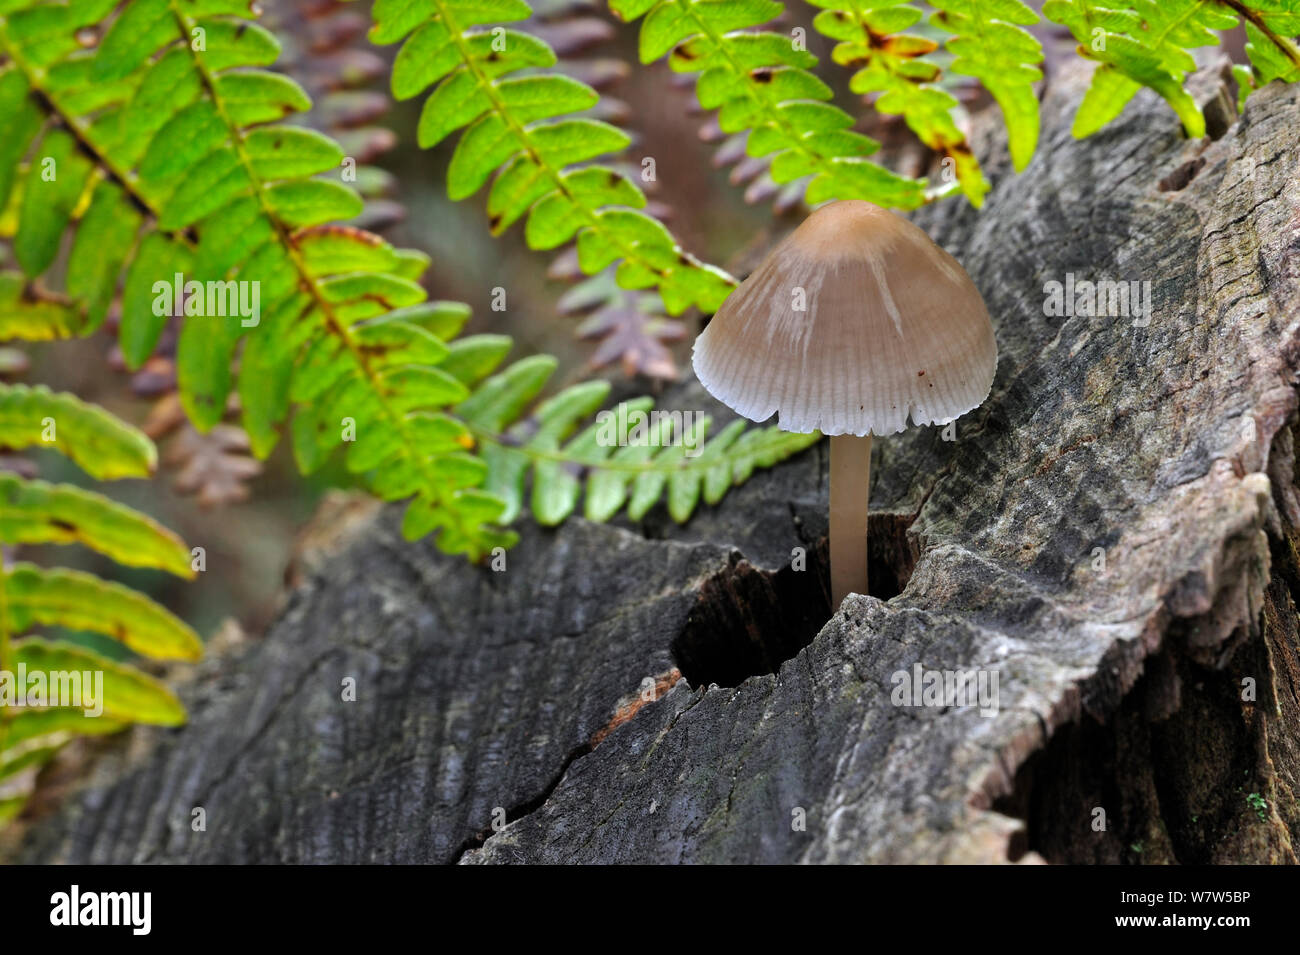 Common bonnet (Mycena galericulata) growing from a tree stump, Belgium, October. Stock Photo